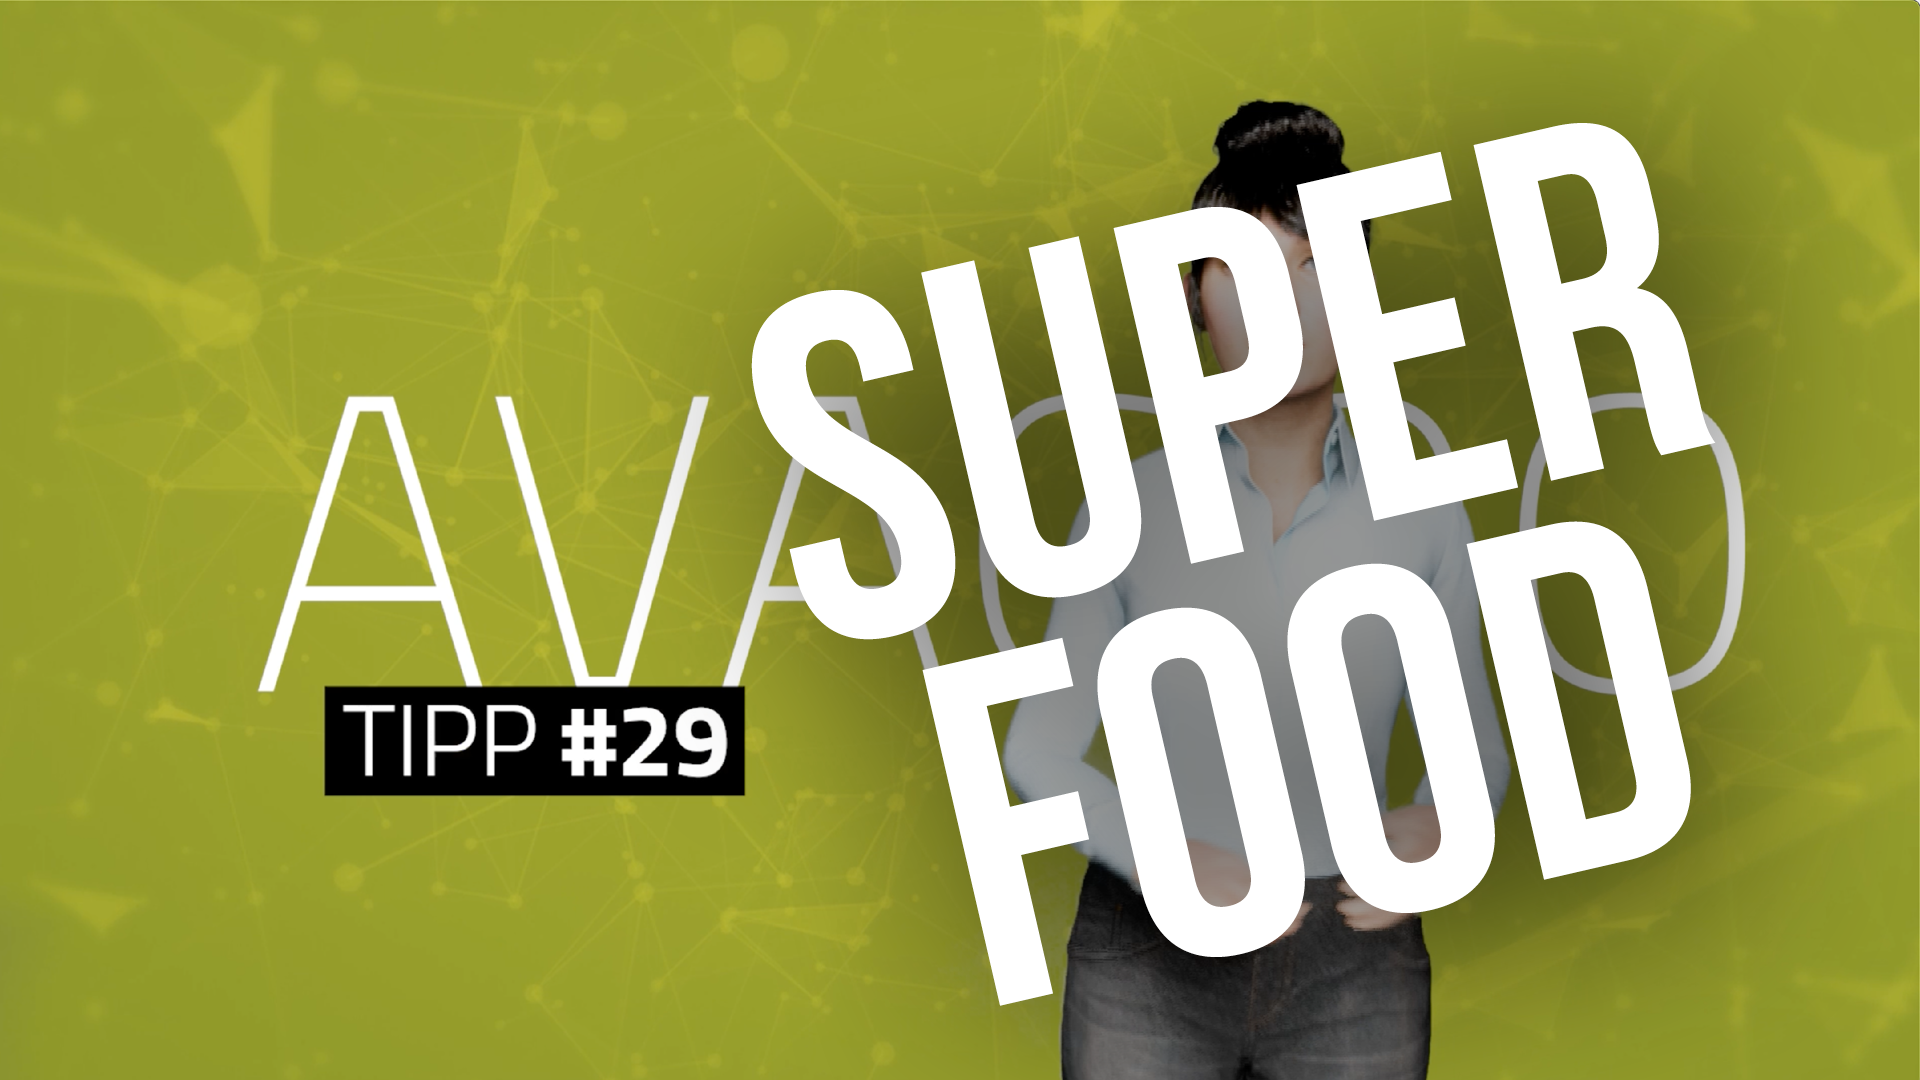 Tipp #29: Superfood tut deinem Business gut